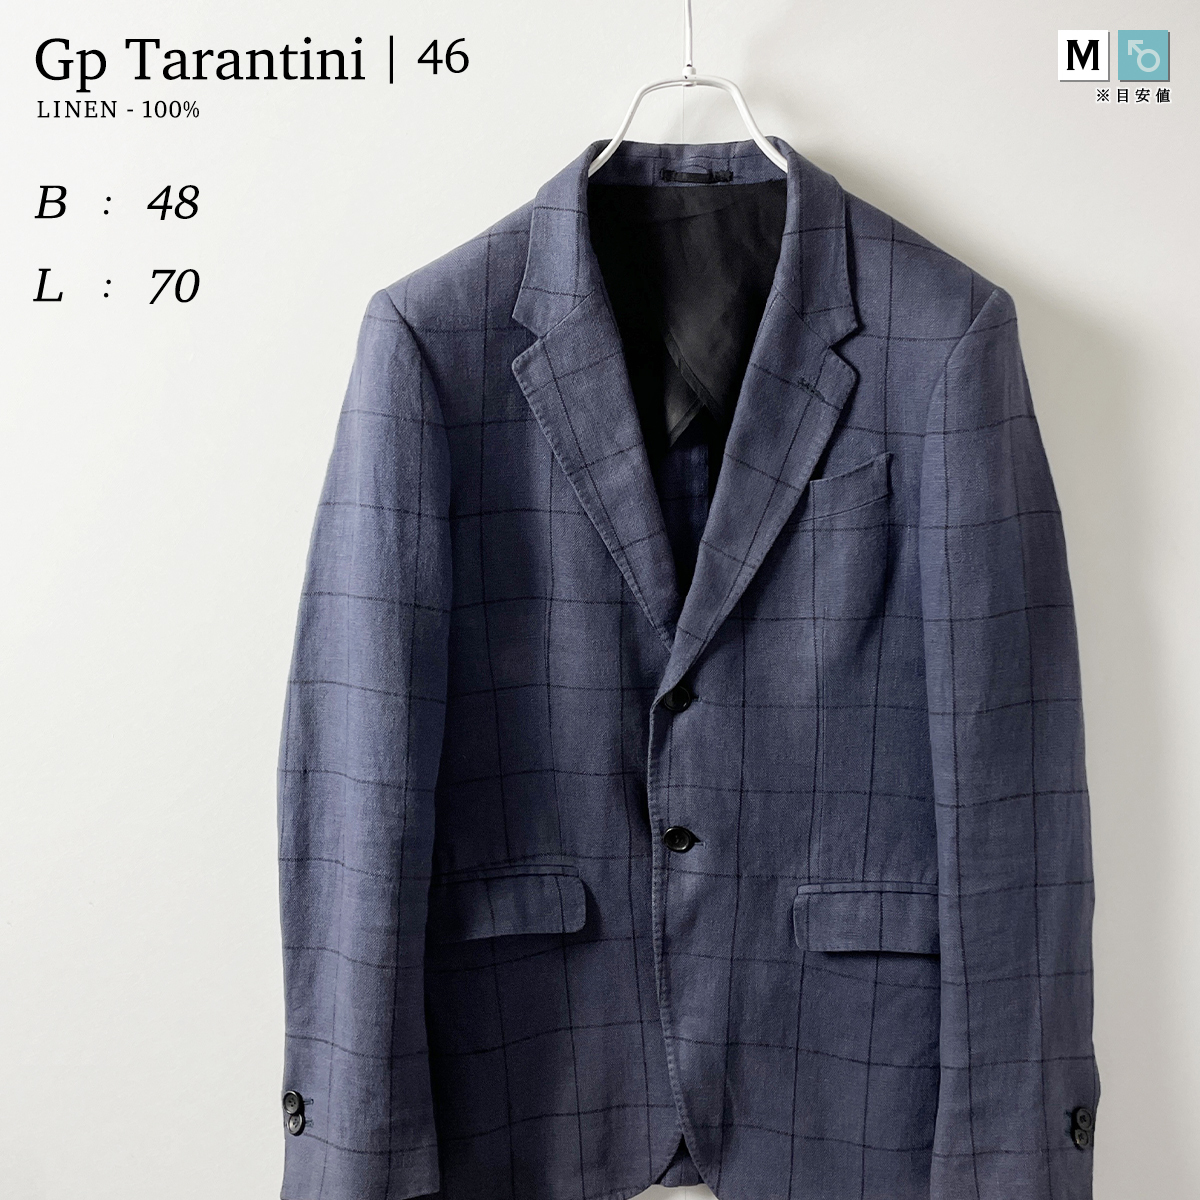 Gp Tarantini　麻 100% イタリア製 テーラード ジャケット 紫 パープル 薄手 リネン 春 夏 秋 チェック 柄 背抜き ウィンドウペン 総柄 46